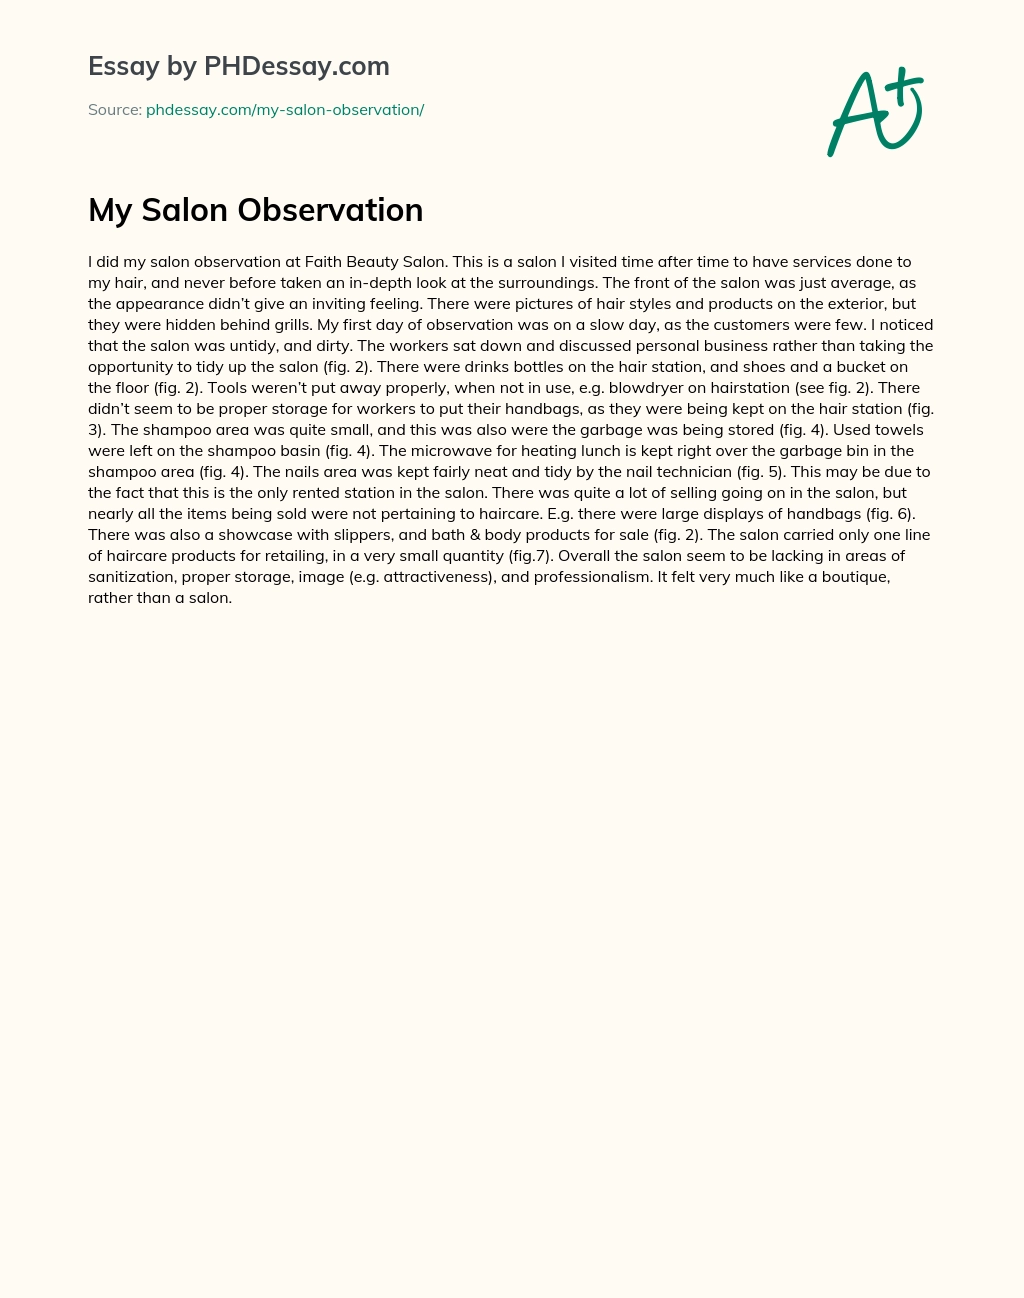 My Salon Observation essay